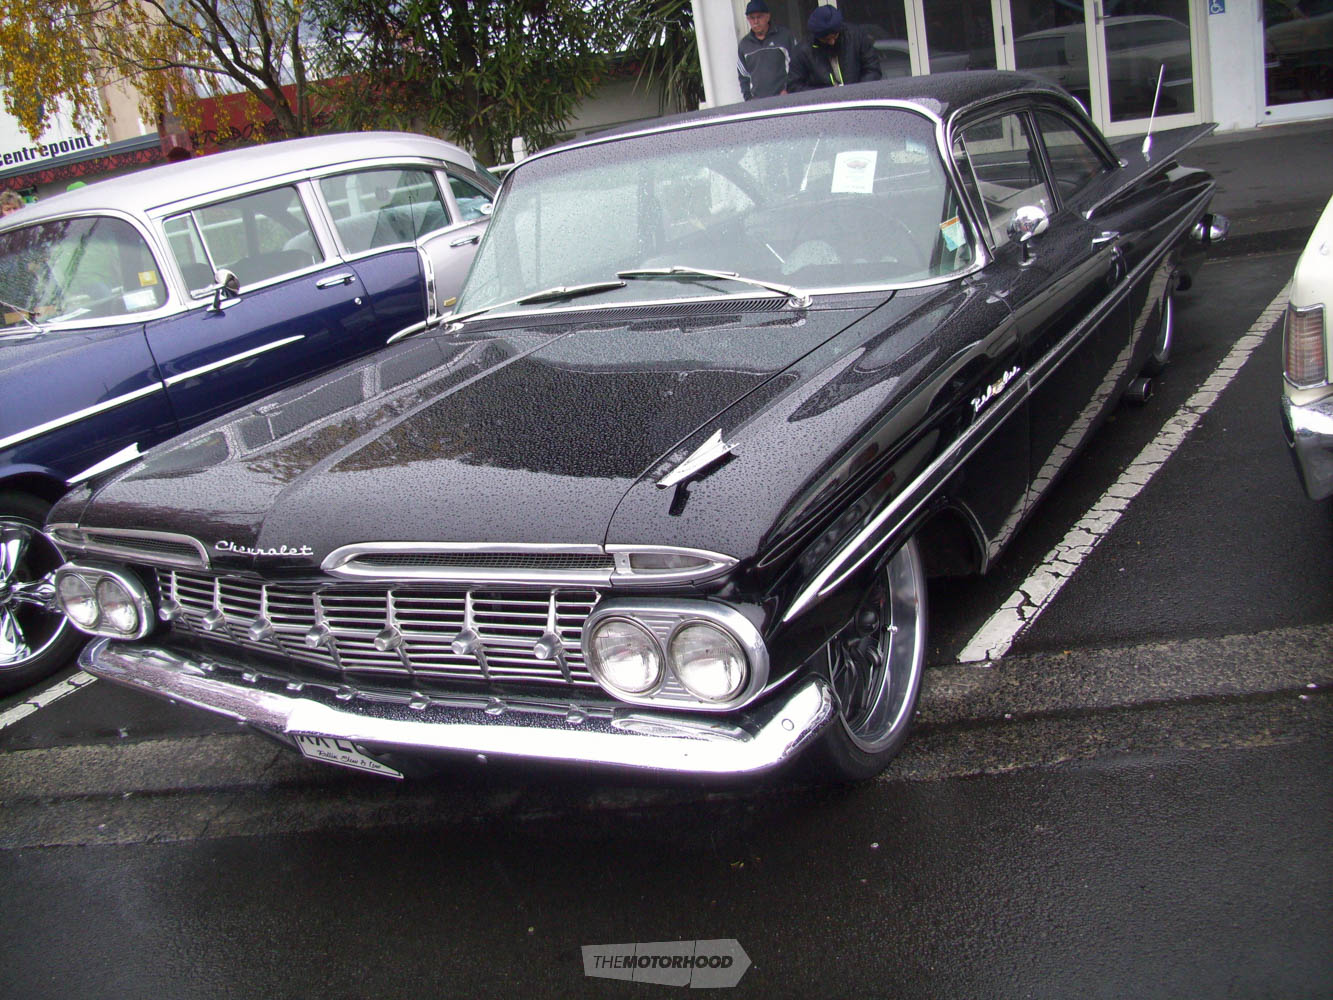 Anther Bay Rodders member Johnny Birch  came in his beautiful  black 1959 Chevrolet BelAir.jpg